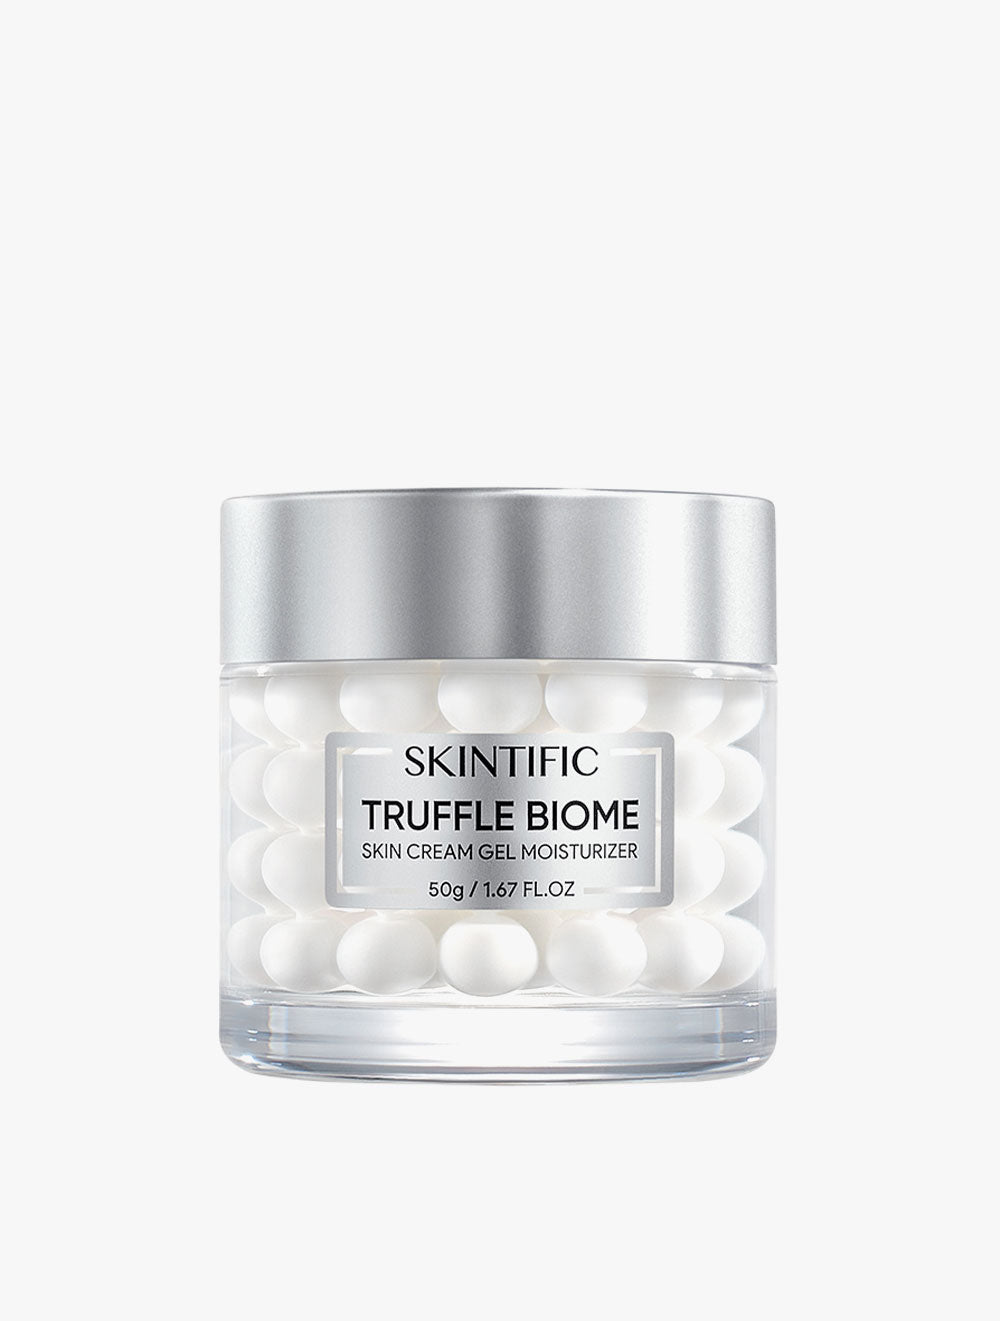 SKINTIFIC Truffle Biome Skin Reborn Cream Gel Moisturizer-50g